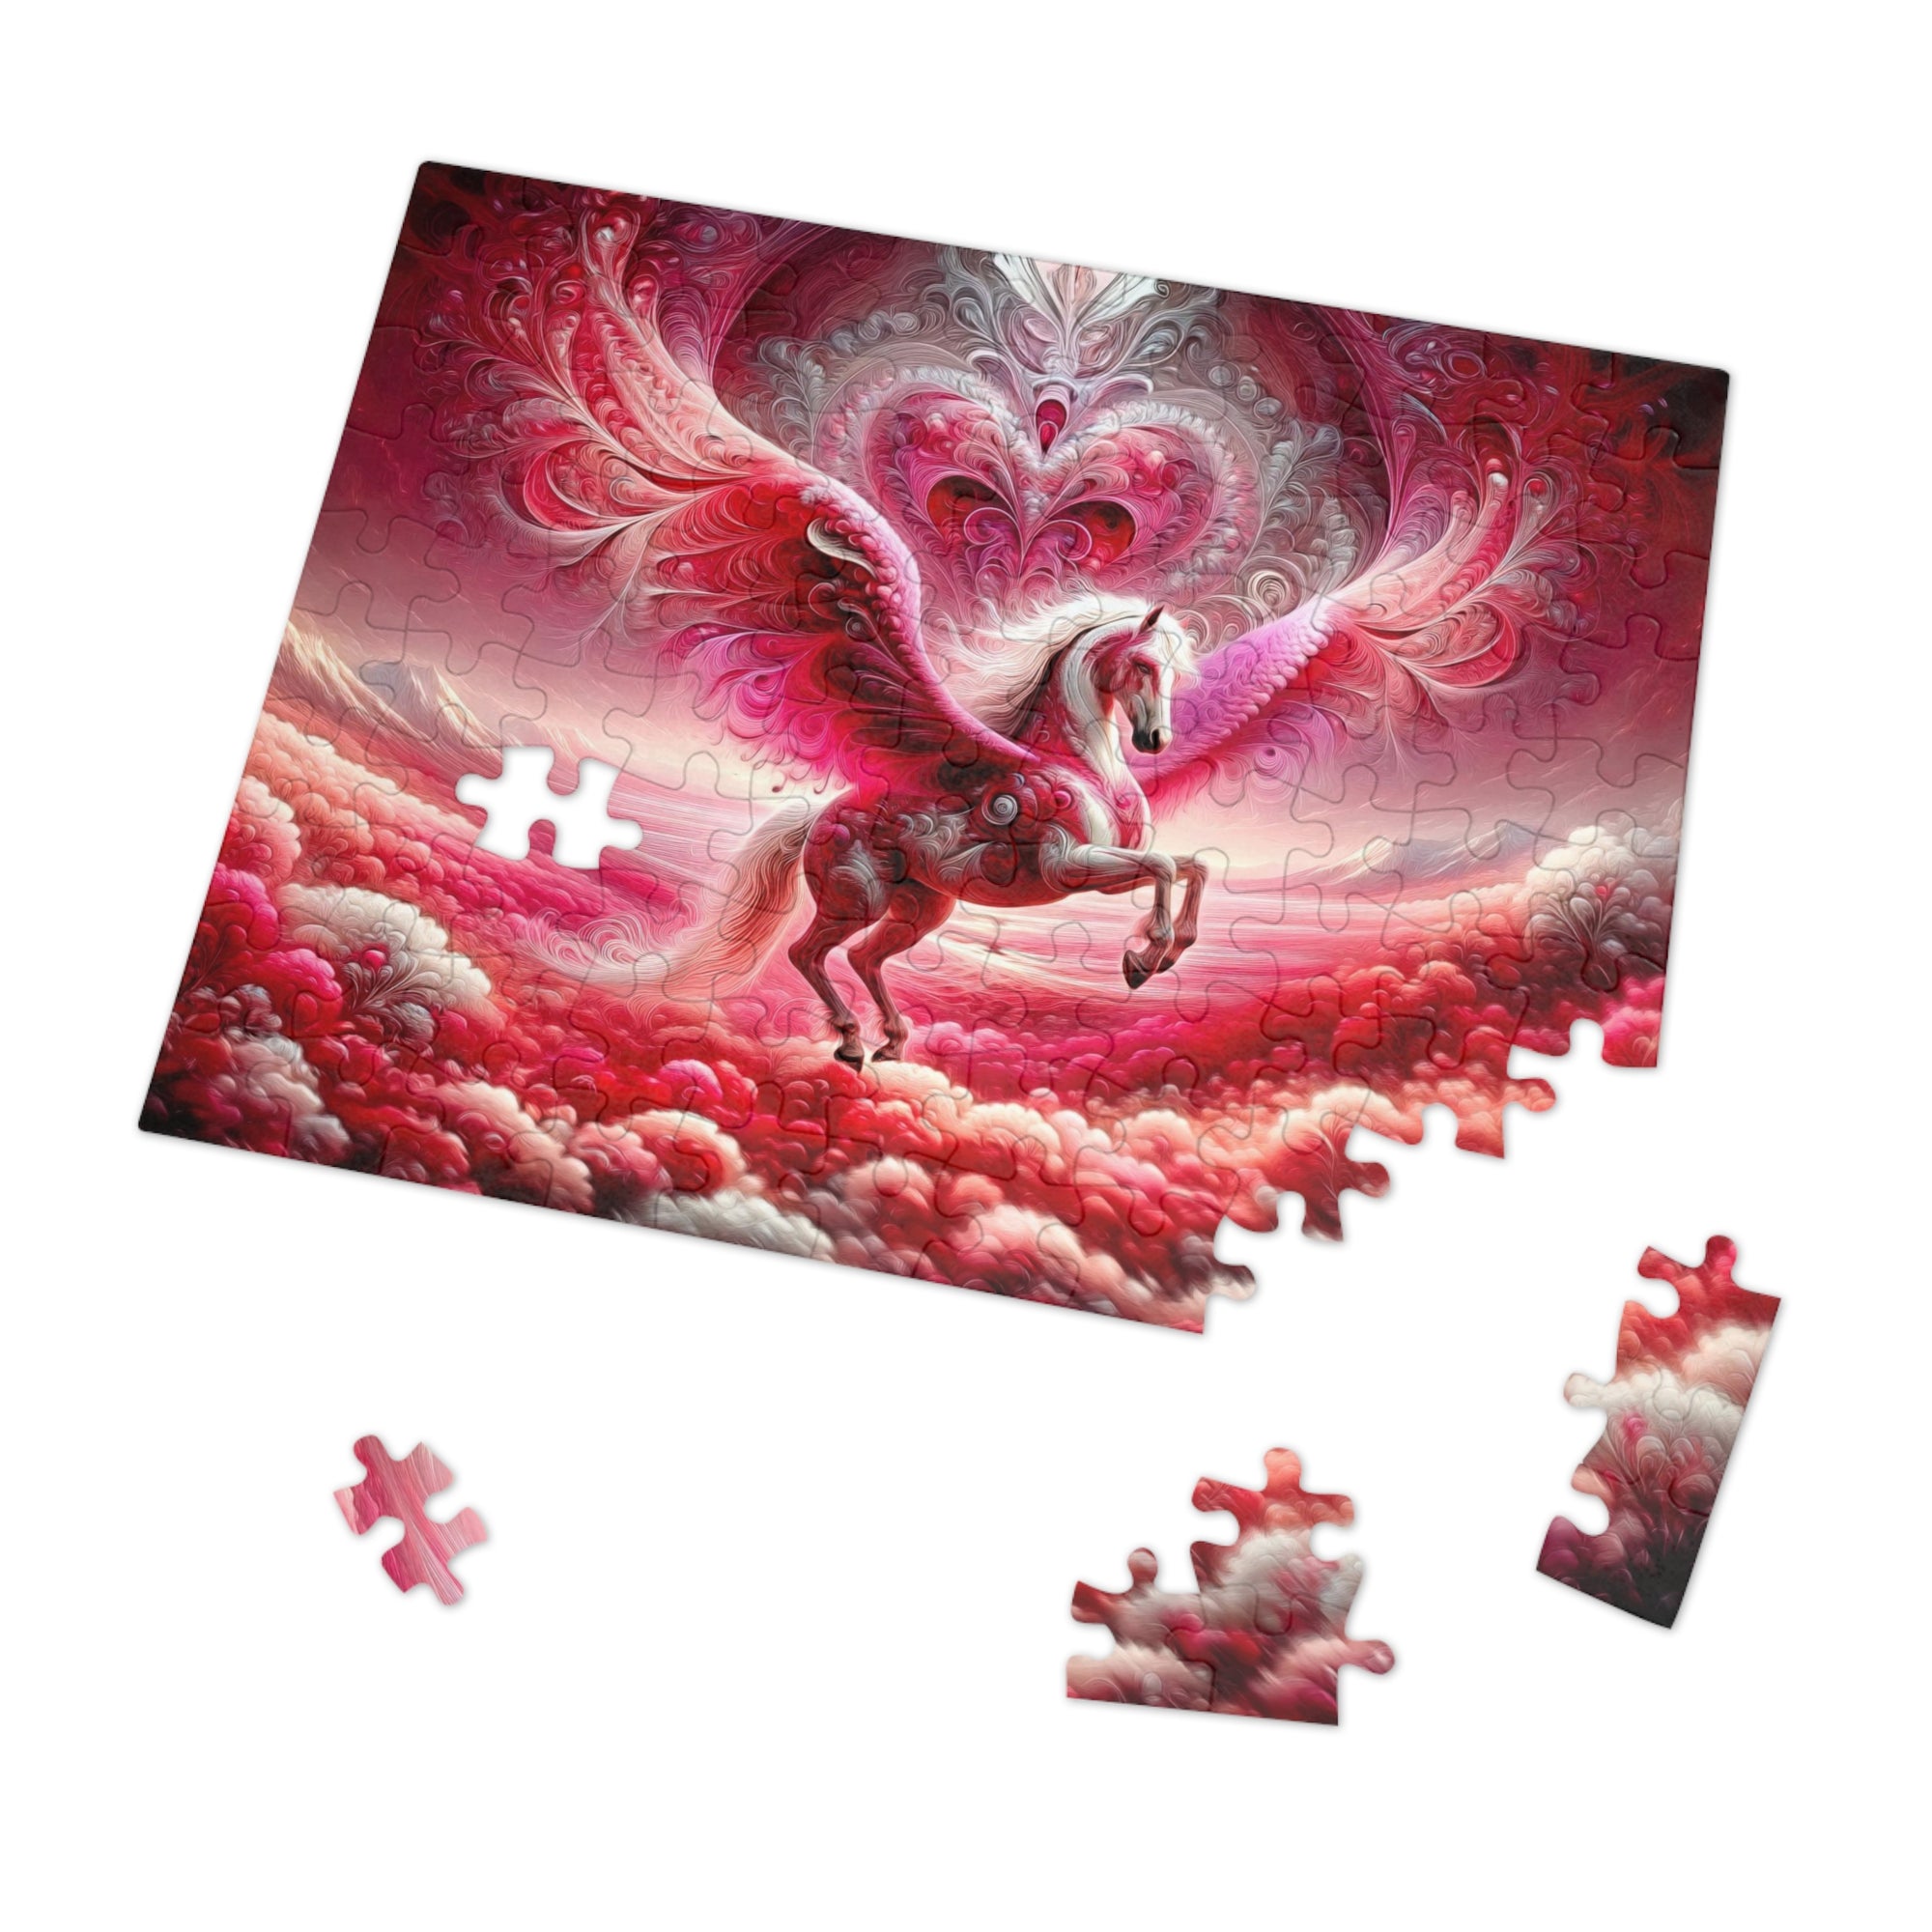 The Crimson Winged Pegasus Jigsaw Puzzle